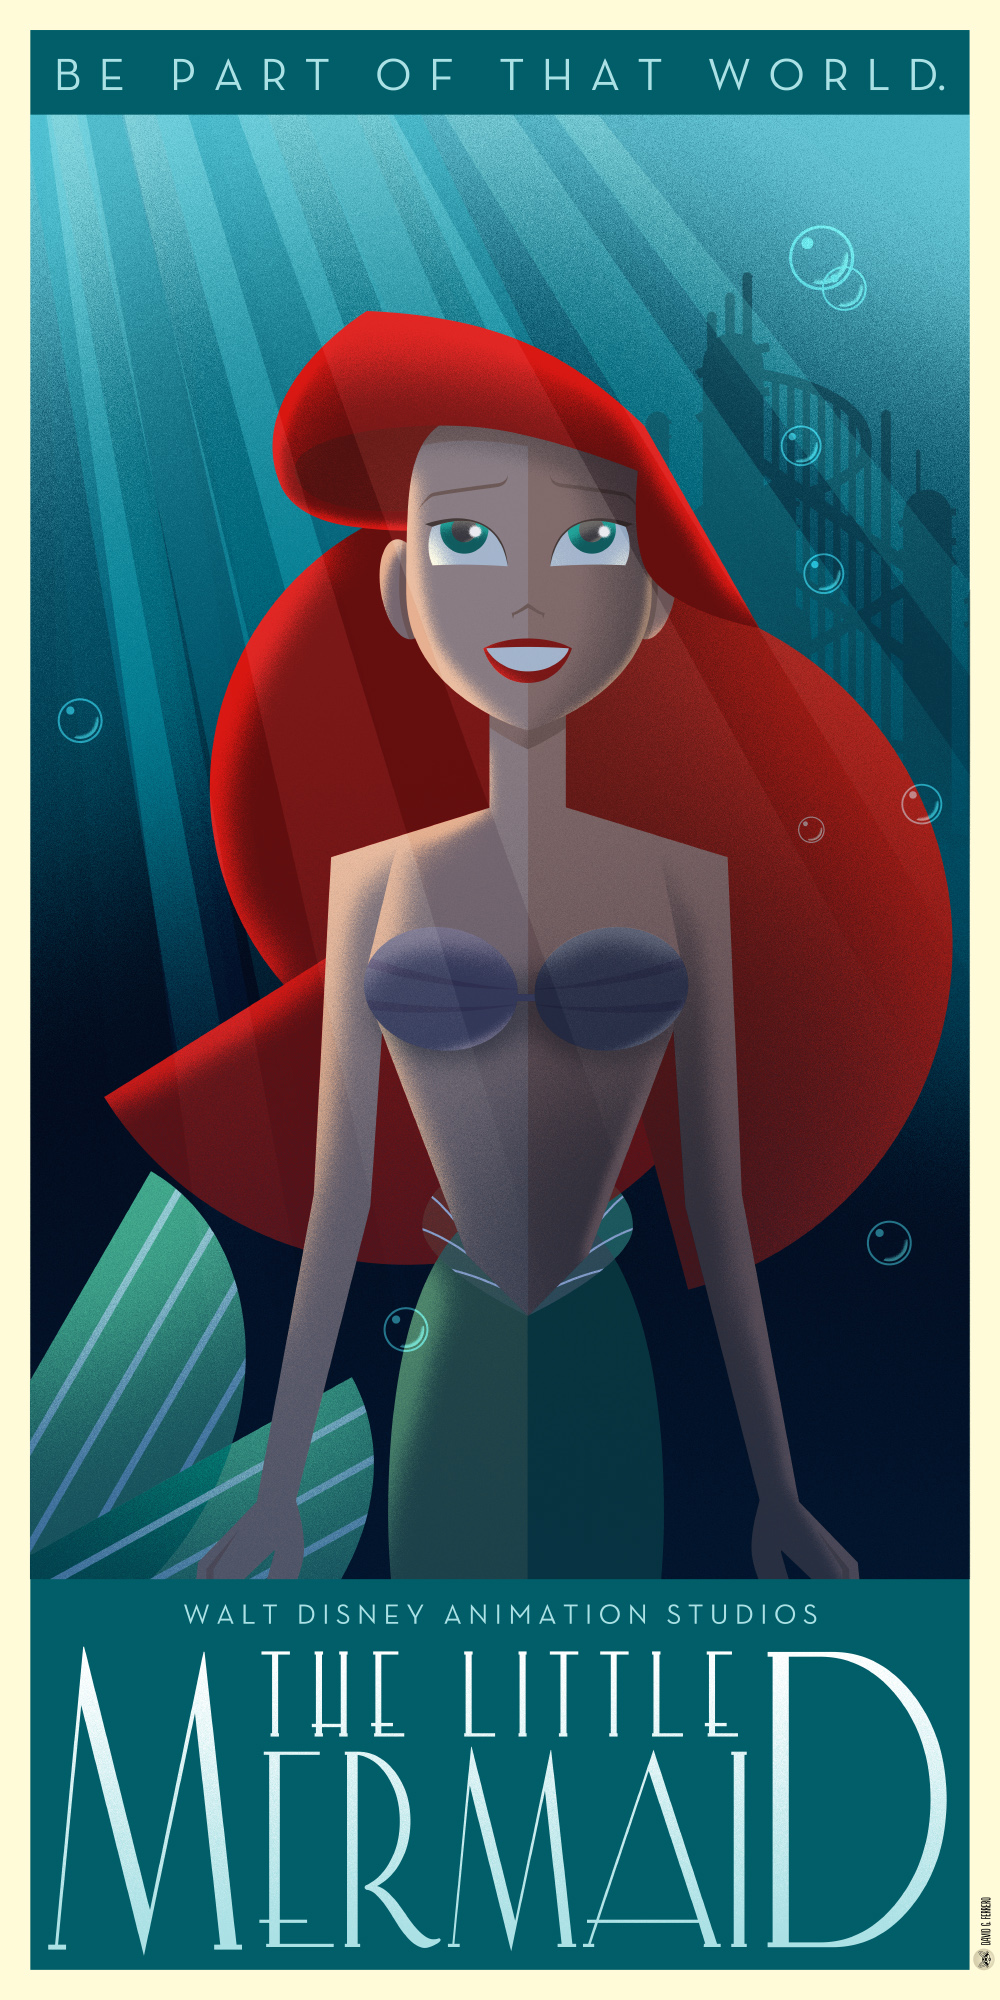 The Little Mermaid Art Deco poster